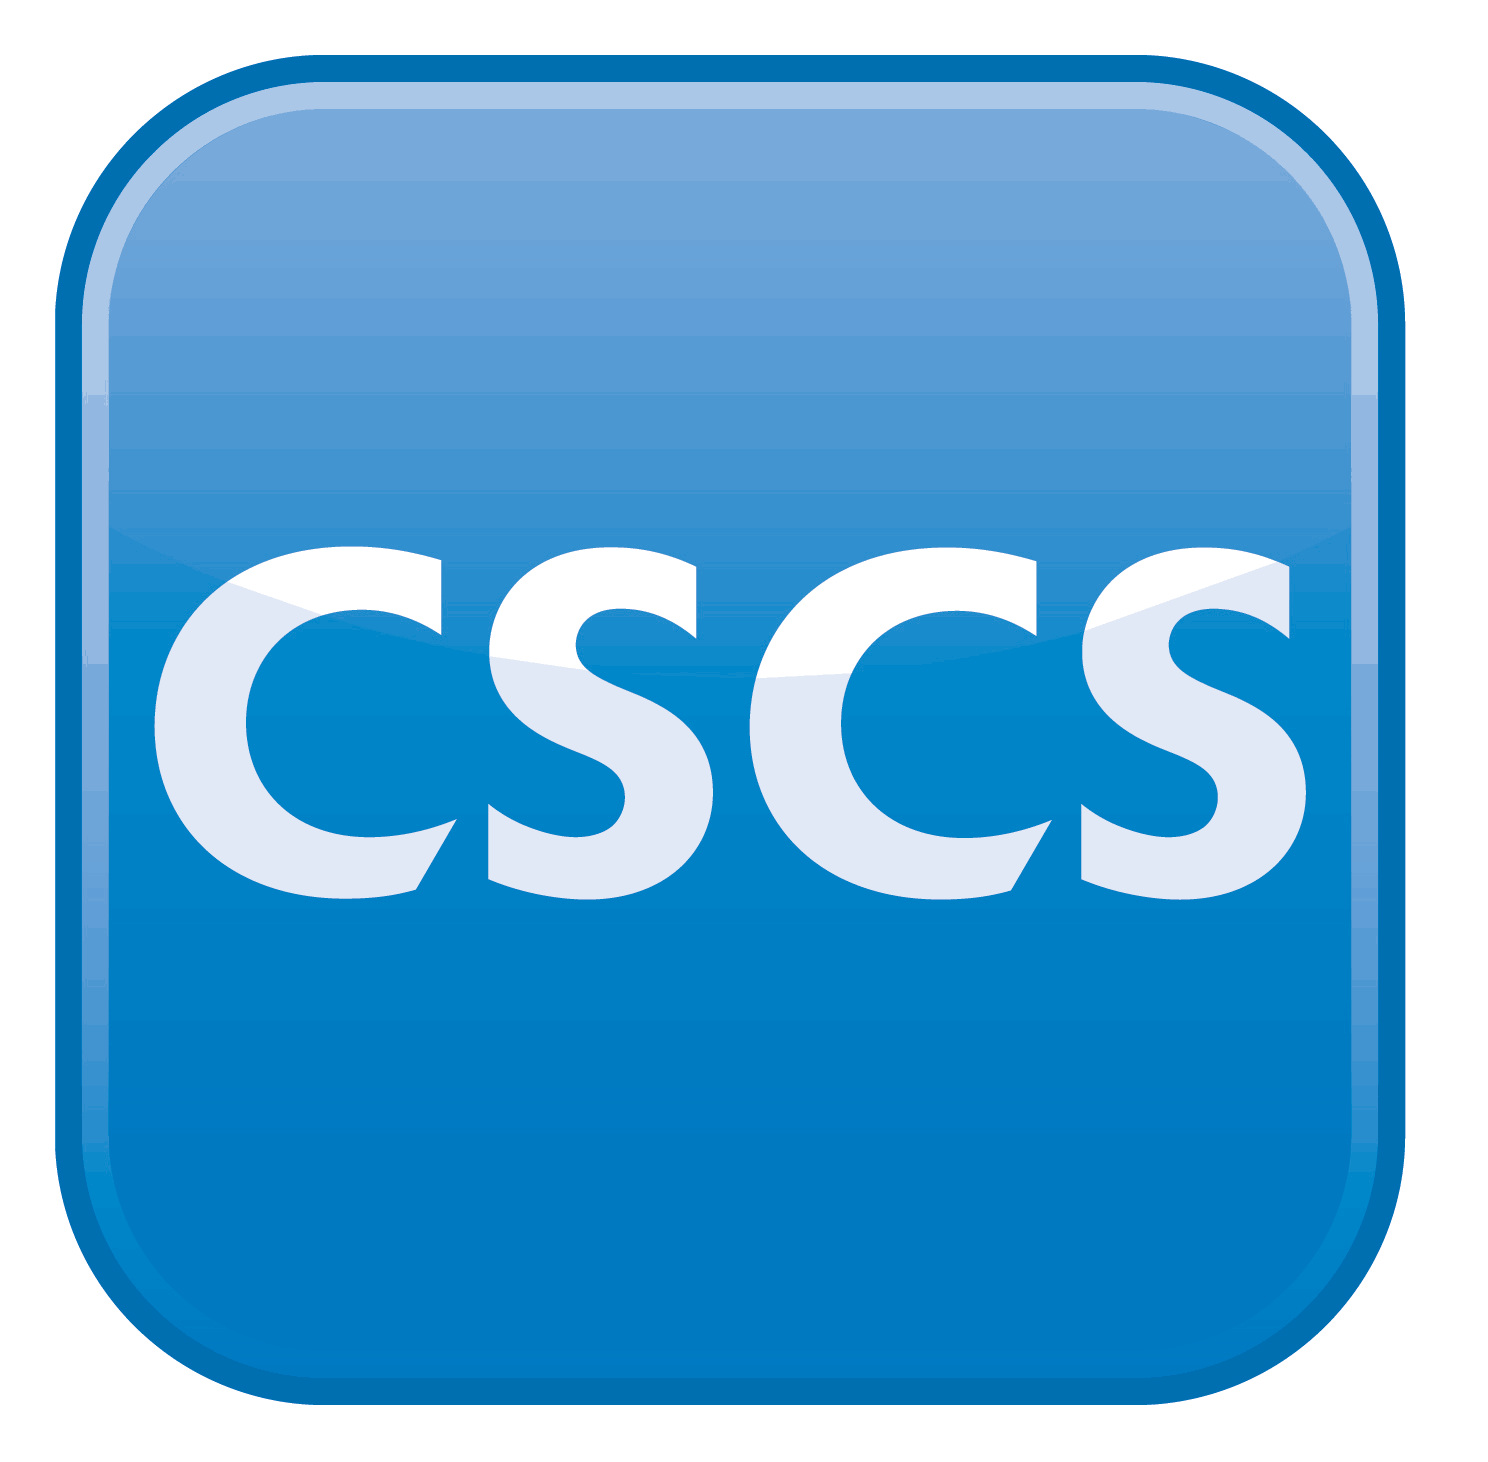 CSCS Construction Skills Certification Scheme